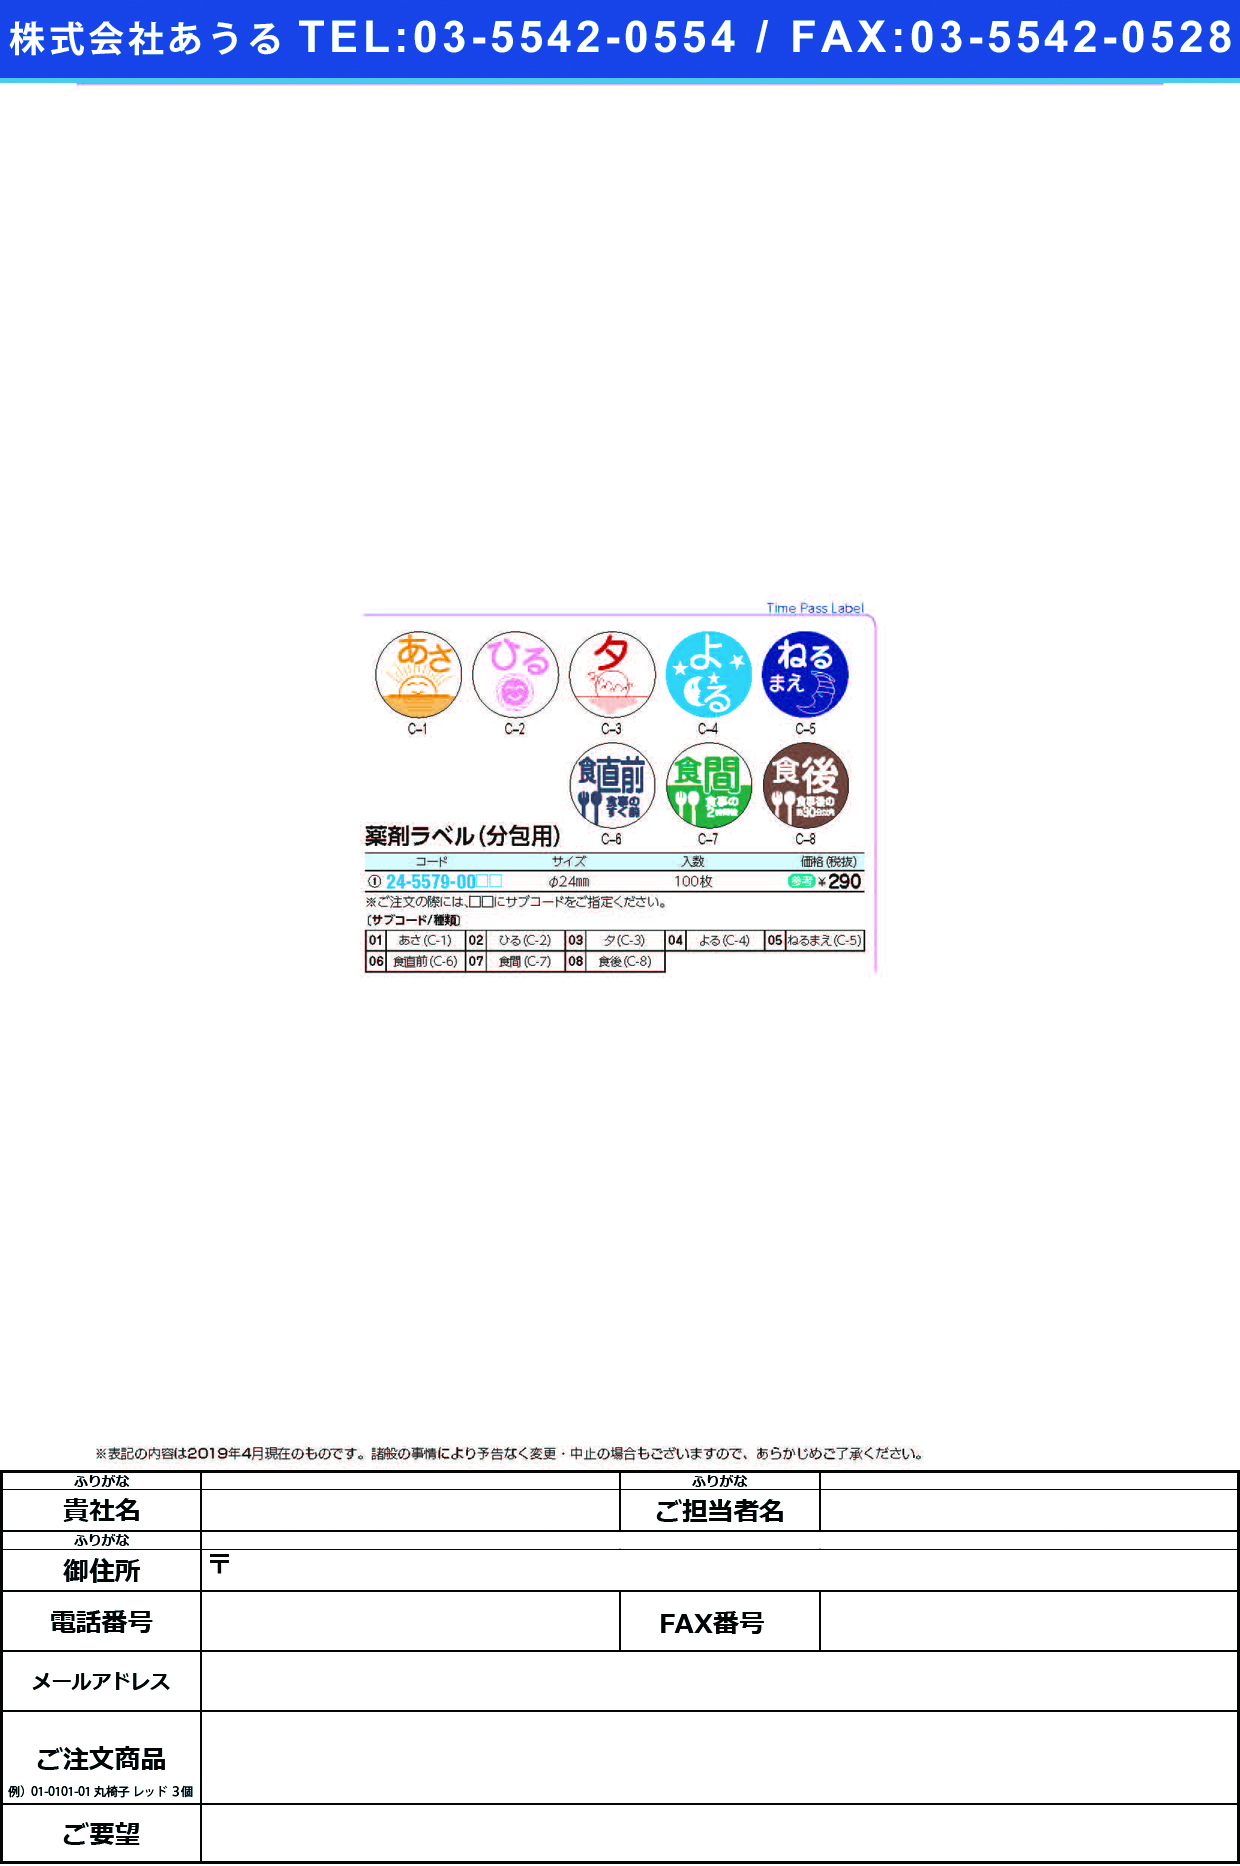 (24-5579-00)薬剤ラベル（分包用） 24MM(100ﾏｲｲﾘ) ﾔｸｻﾞｲﾗﾍﾞﾙﾌﾞﾝﾎﾟｳﾖｳ 食間（Ｃ－７）【1袋単位】【2019年カタログ商品】